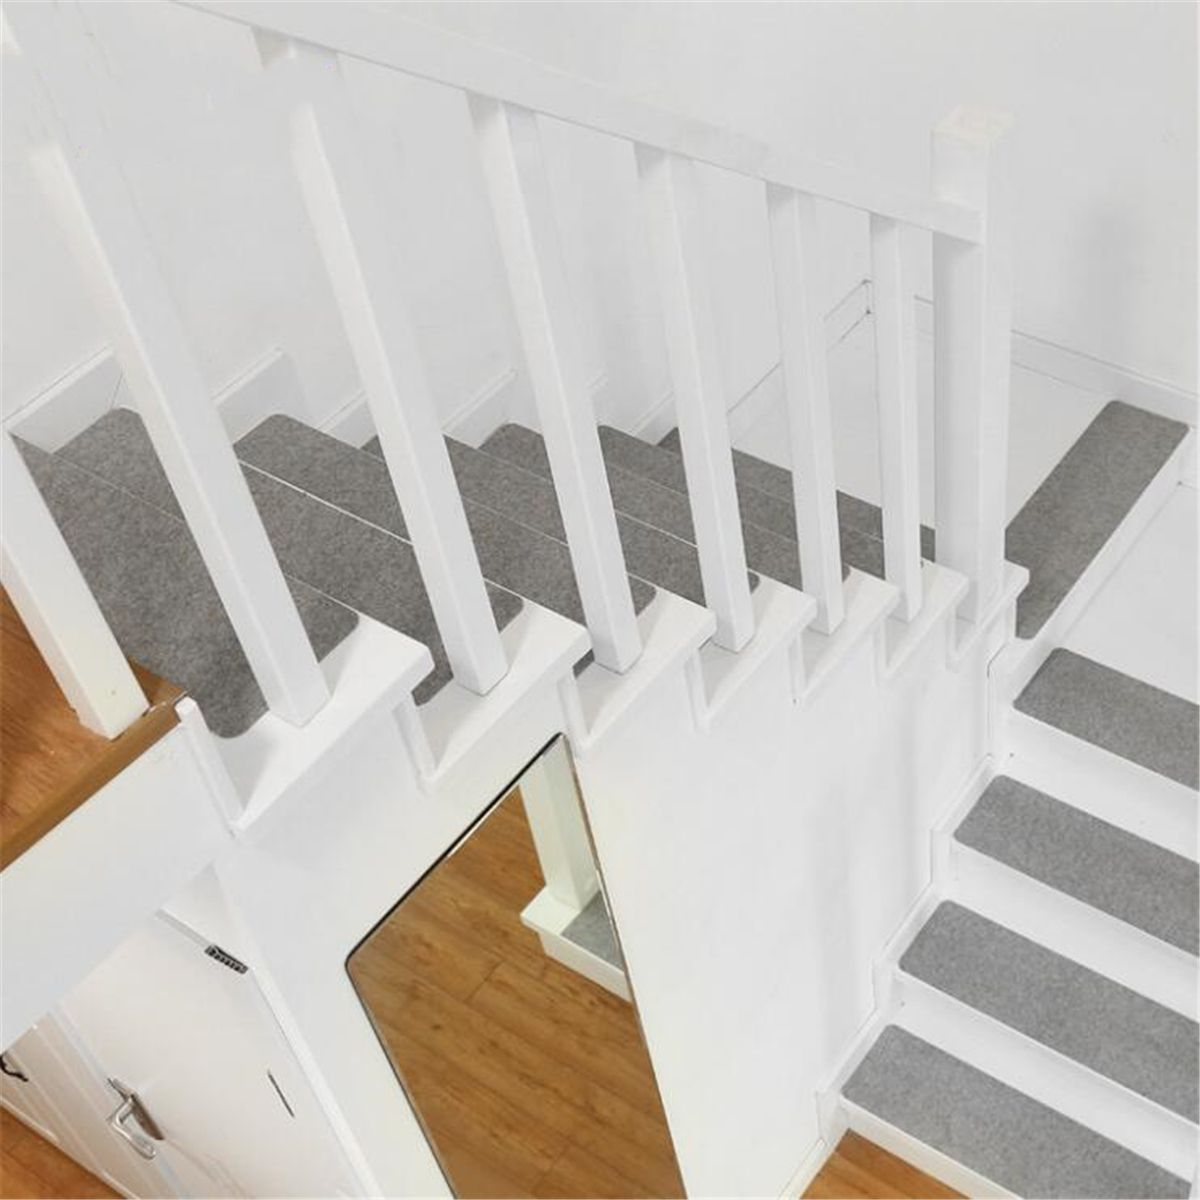 14PcsSet-Stair-Treads-Non-Skid-Slip-Carpet-Stair-Treads-Pads-Soft-Indoor-Home-Set-1510950